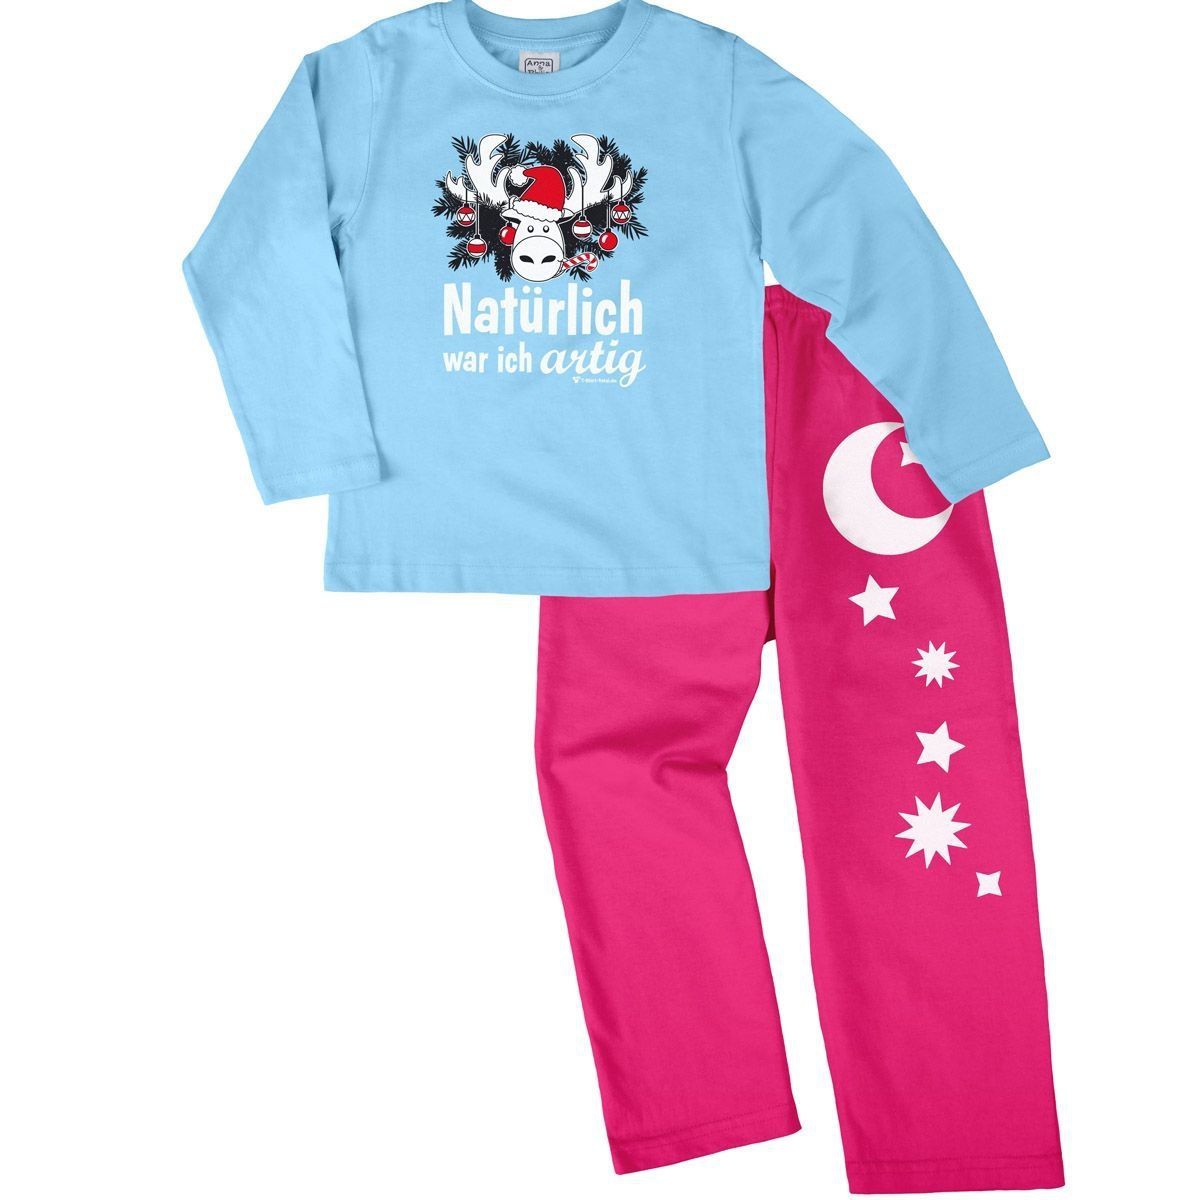 Natürlich artig Pyjama Set hellblau / pink 110 / 116